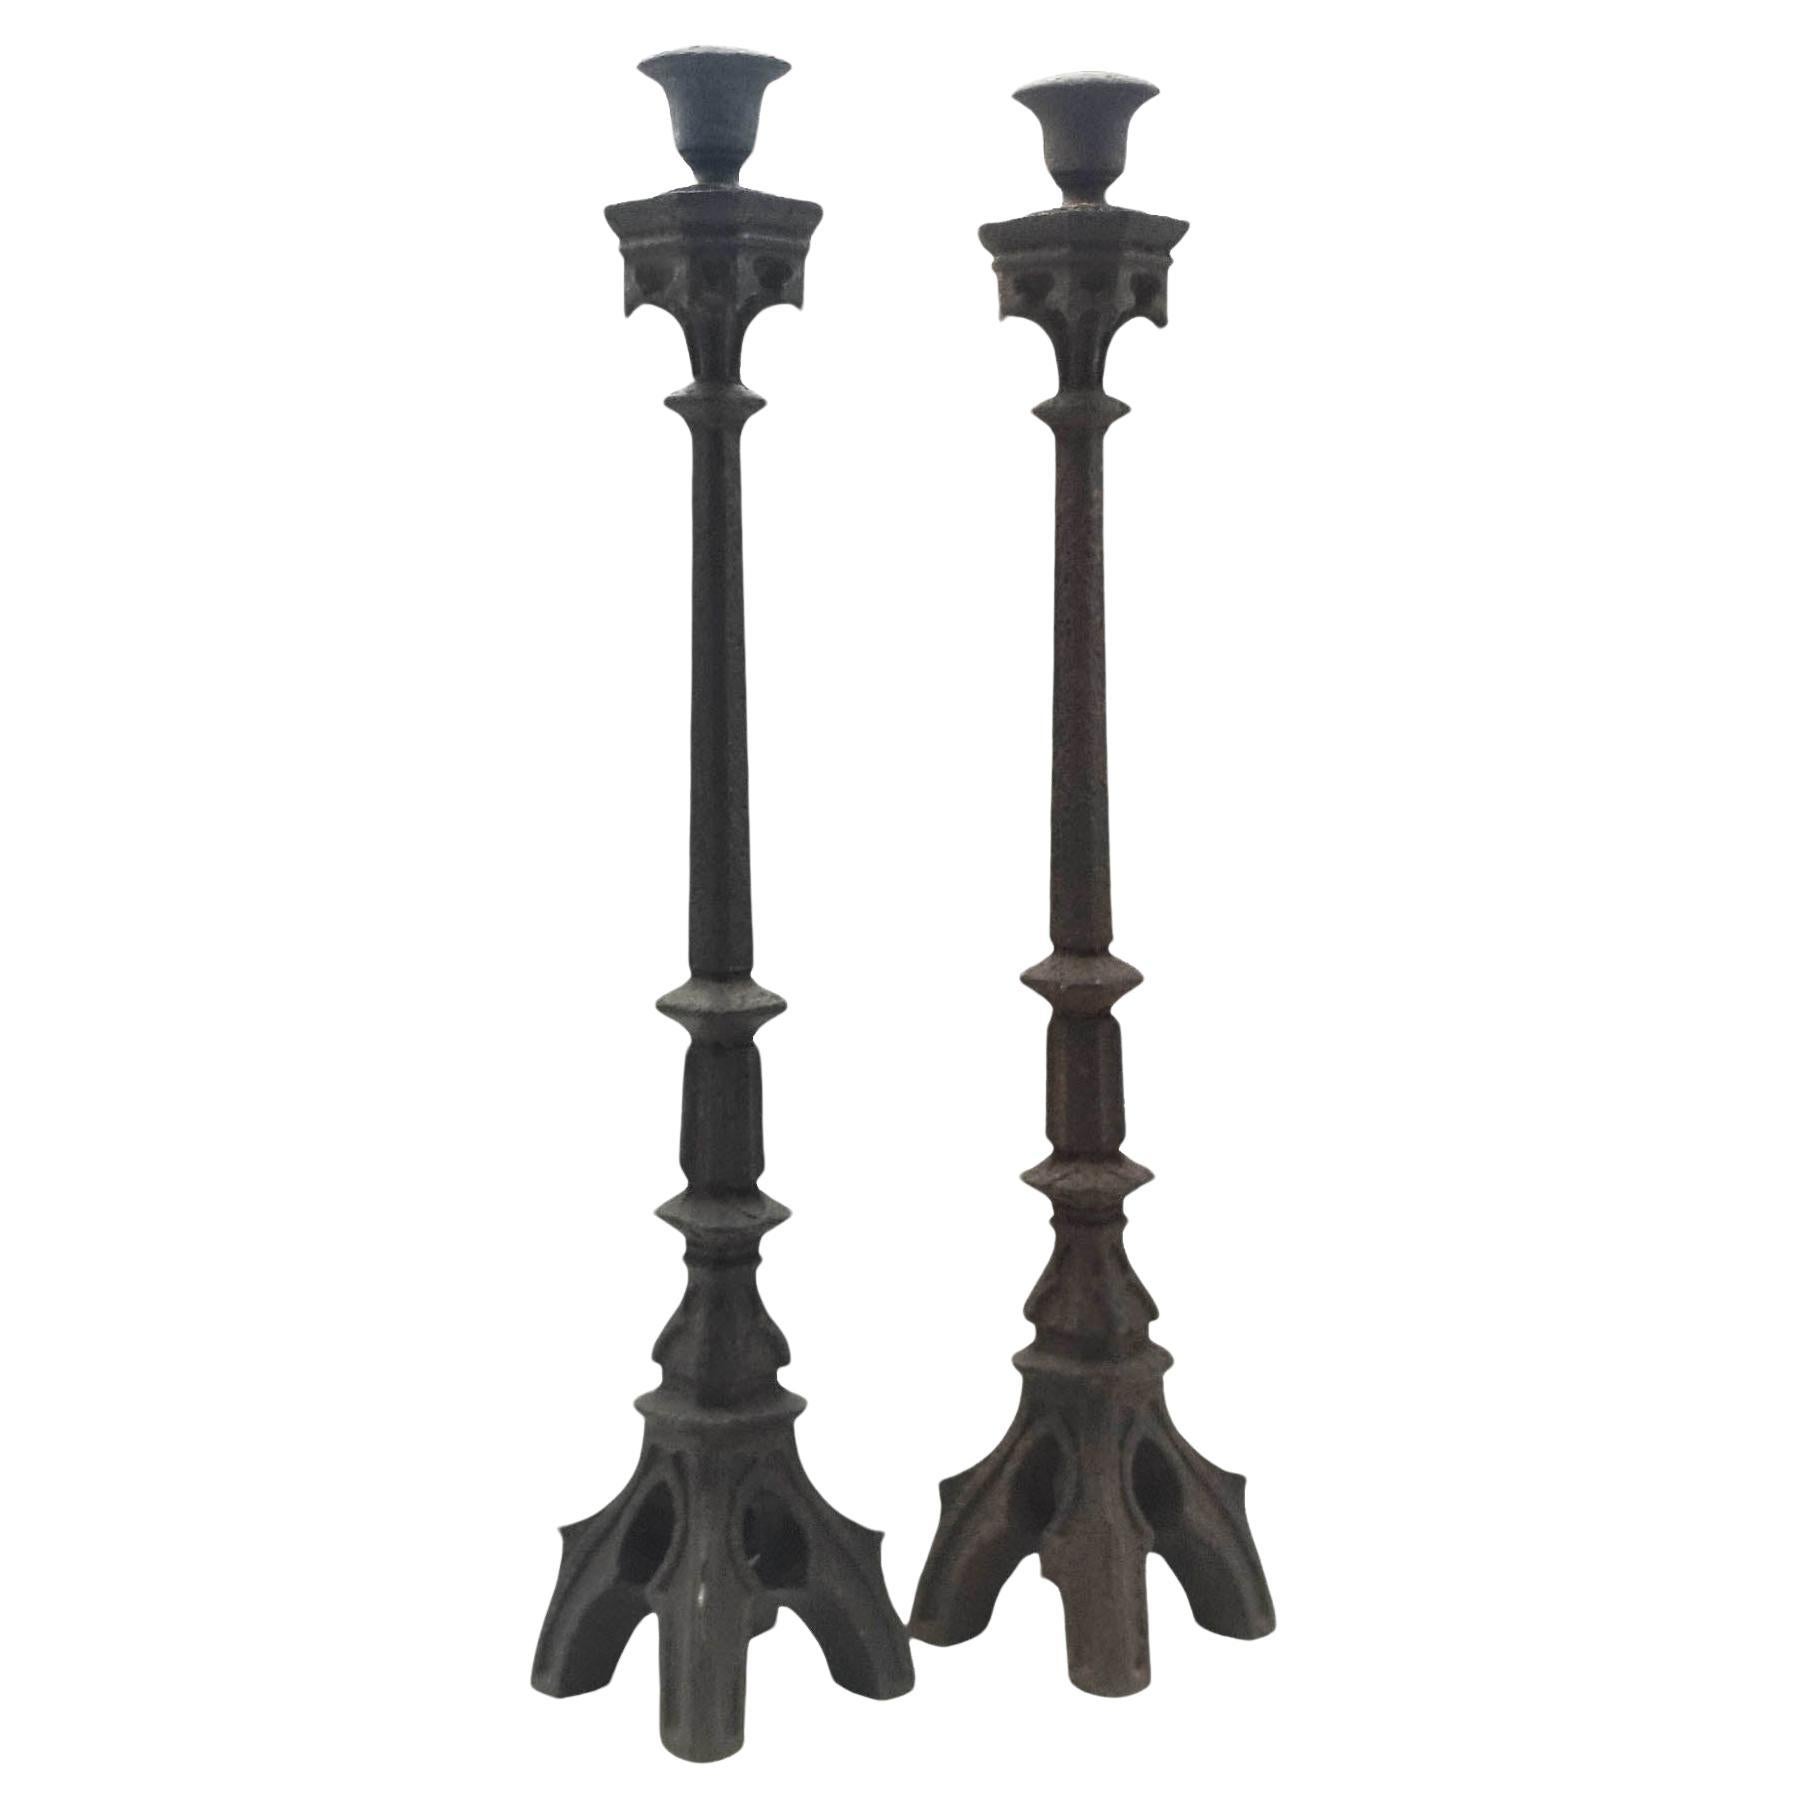 Pair of Neo-Gothic Iron Altar Candlesticks, Italy, 19th century